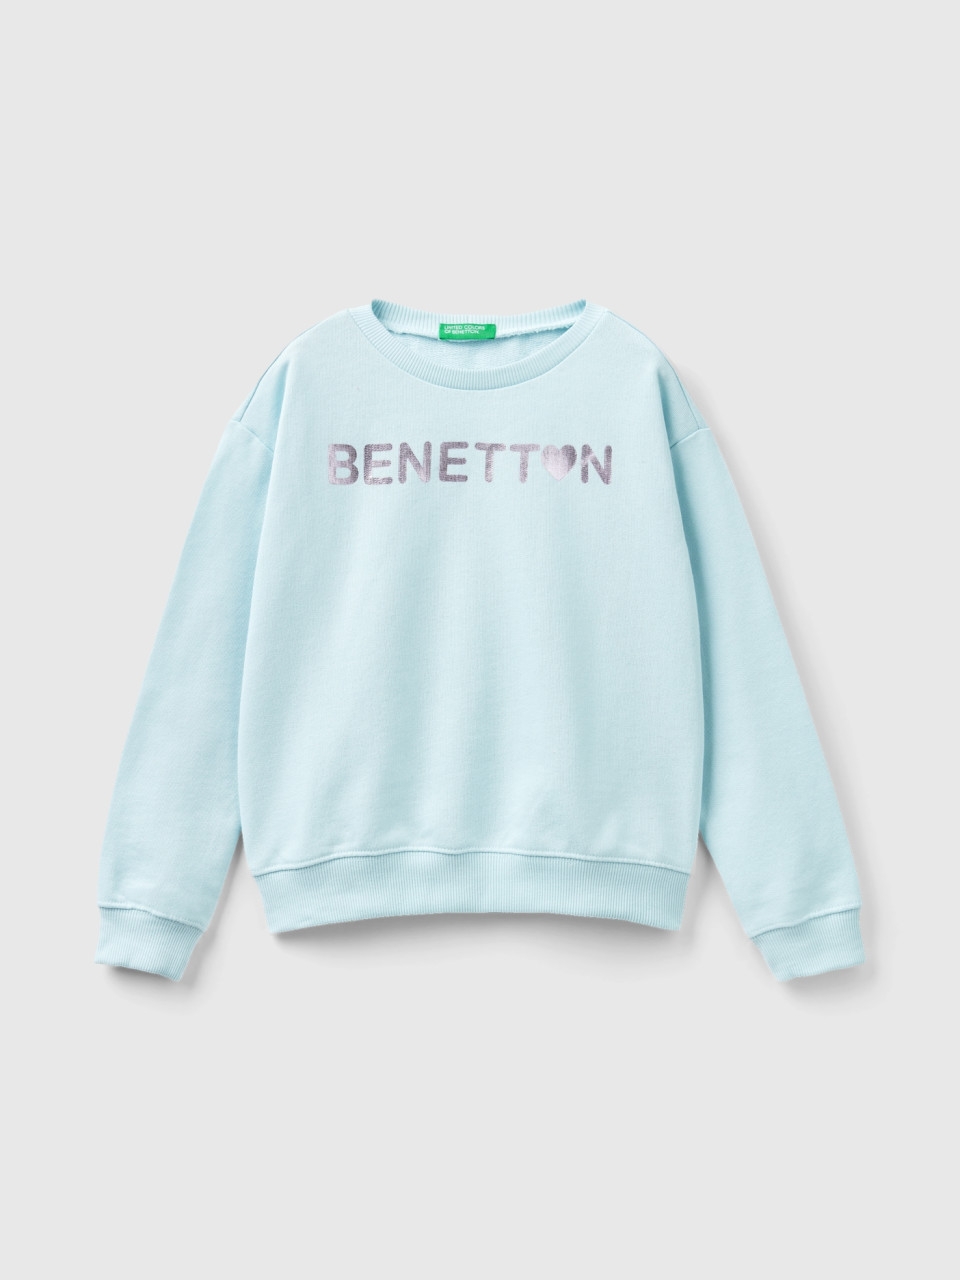 Benetton, 100% Cotton Sweatshirt With Logo, Aqua, Kids